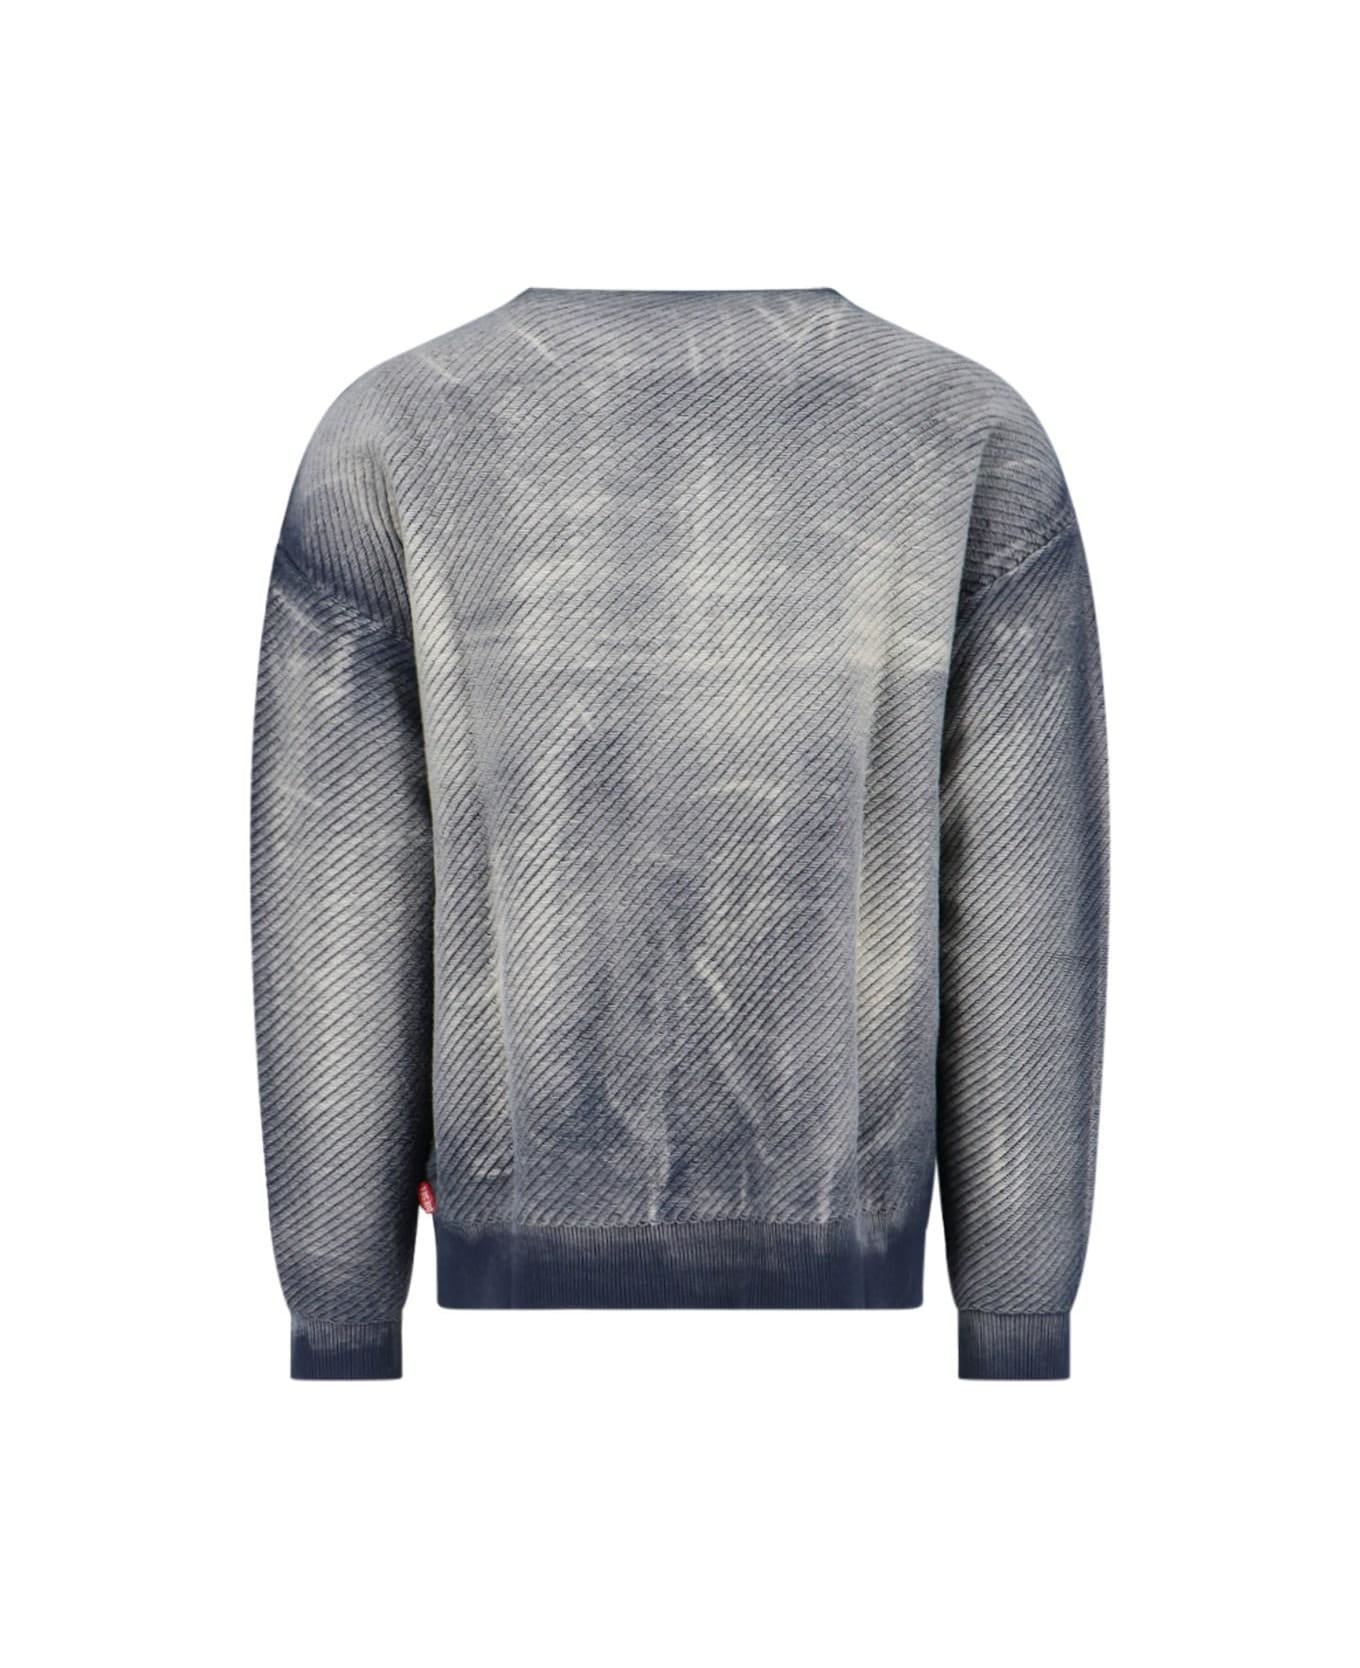 Diesel Frayed Sweater